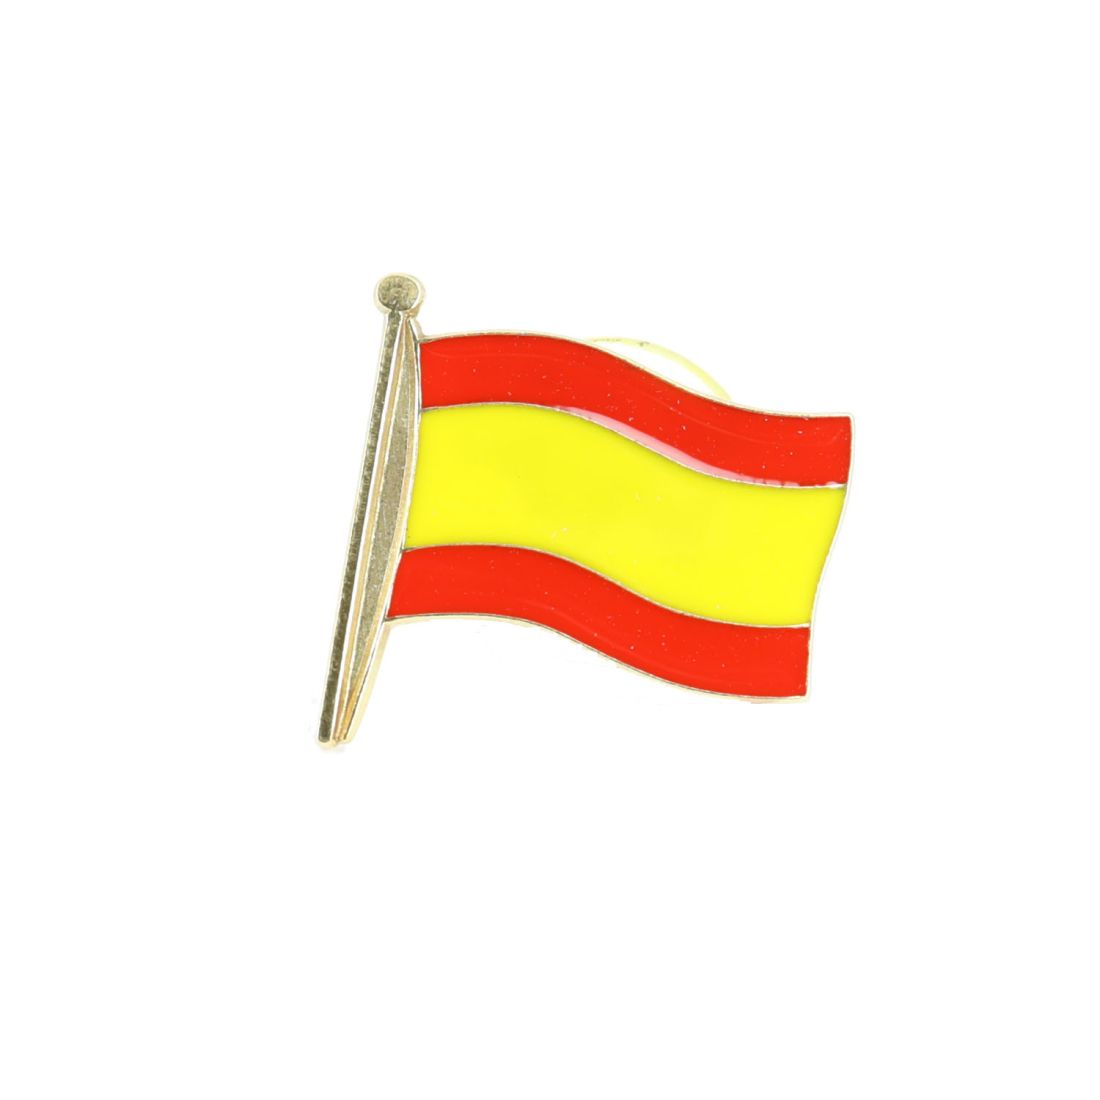 Pin's drapeau Espagnol - Espagne - Tony et Paul, Made in France à Saumur Tony & Paul